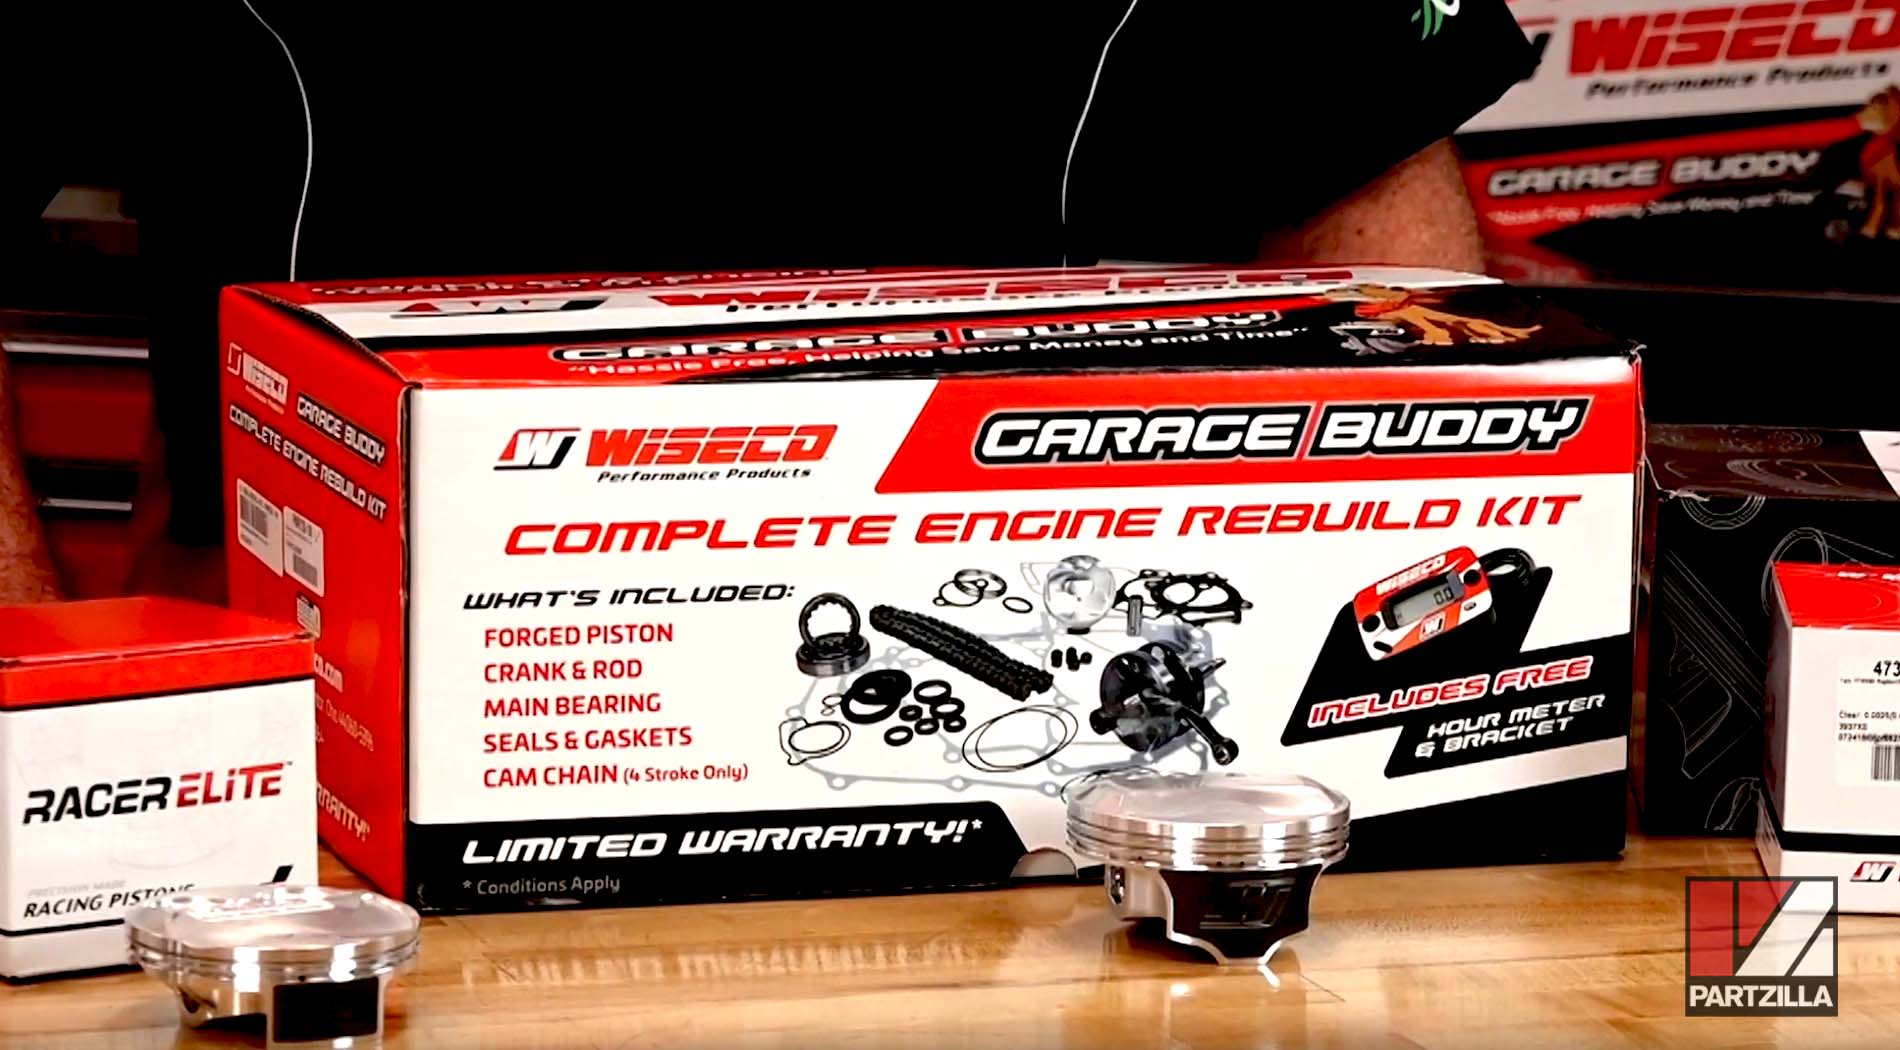 Wiseco Garage Buddy complete engine rebuild kit